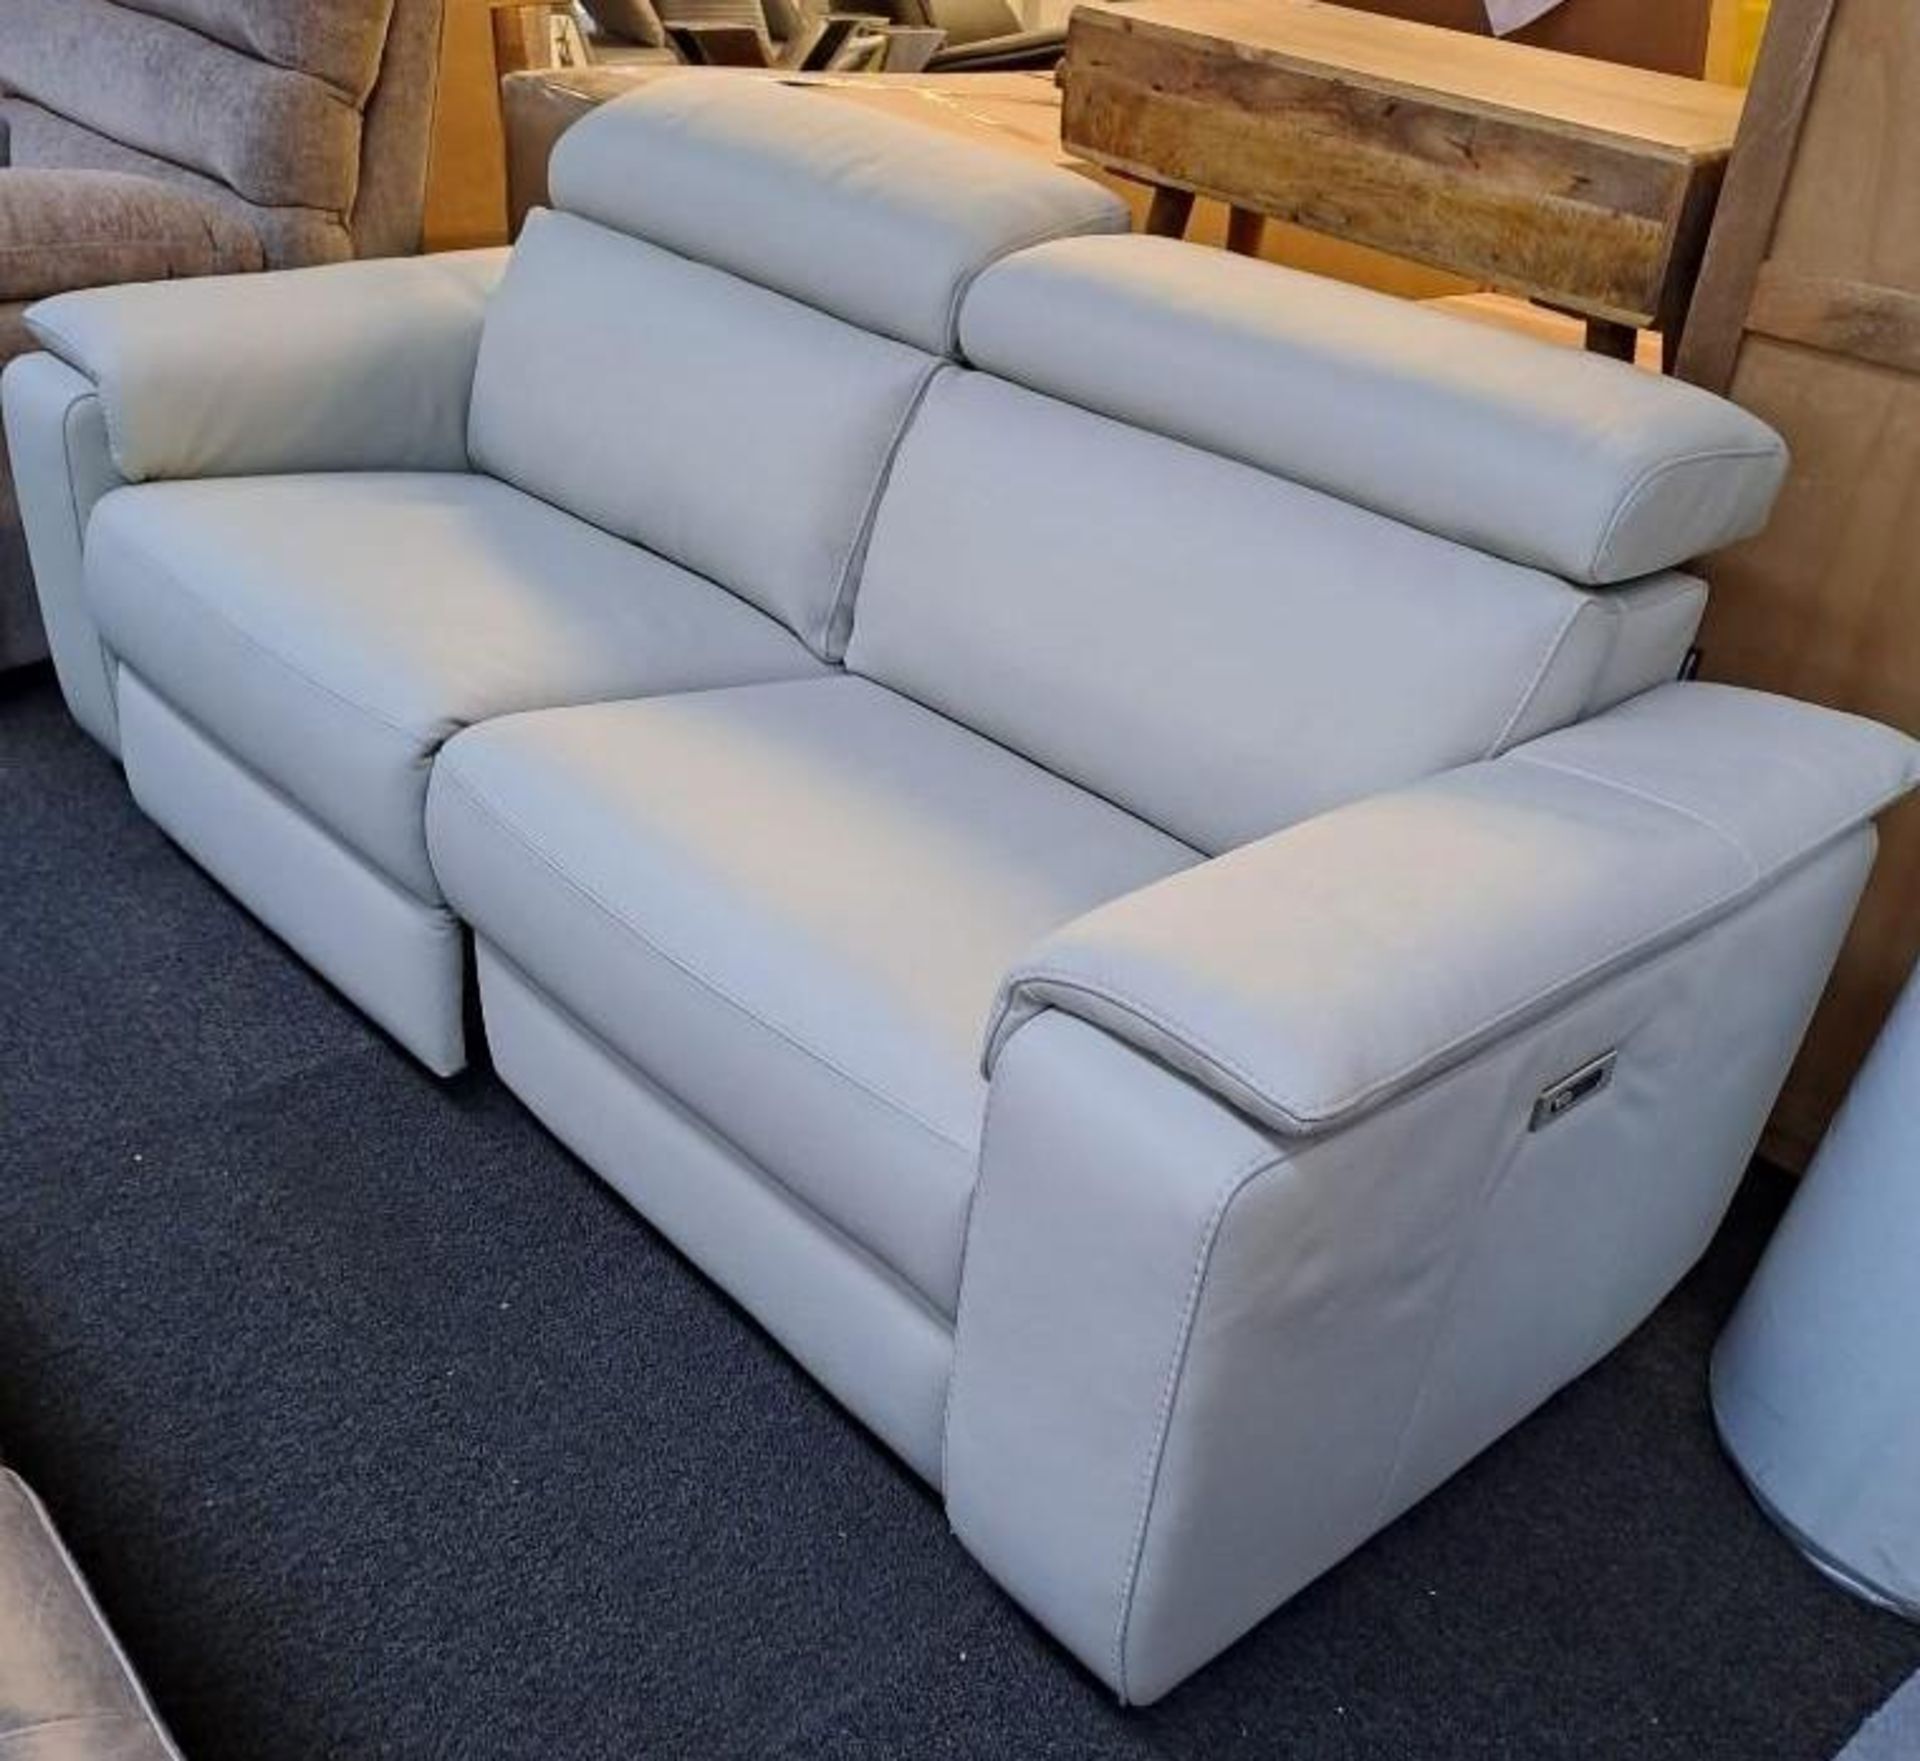 *EX DISPLAY* Furniture Village Nicoletti 3 seater power reclining 100% leather sofa. RRP: £2895